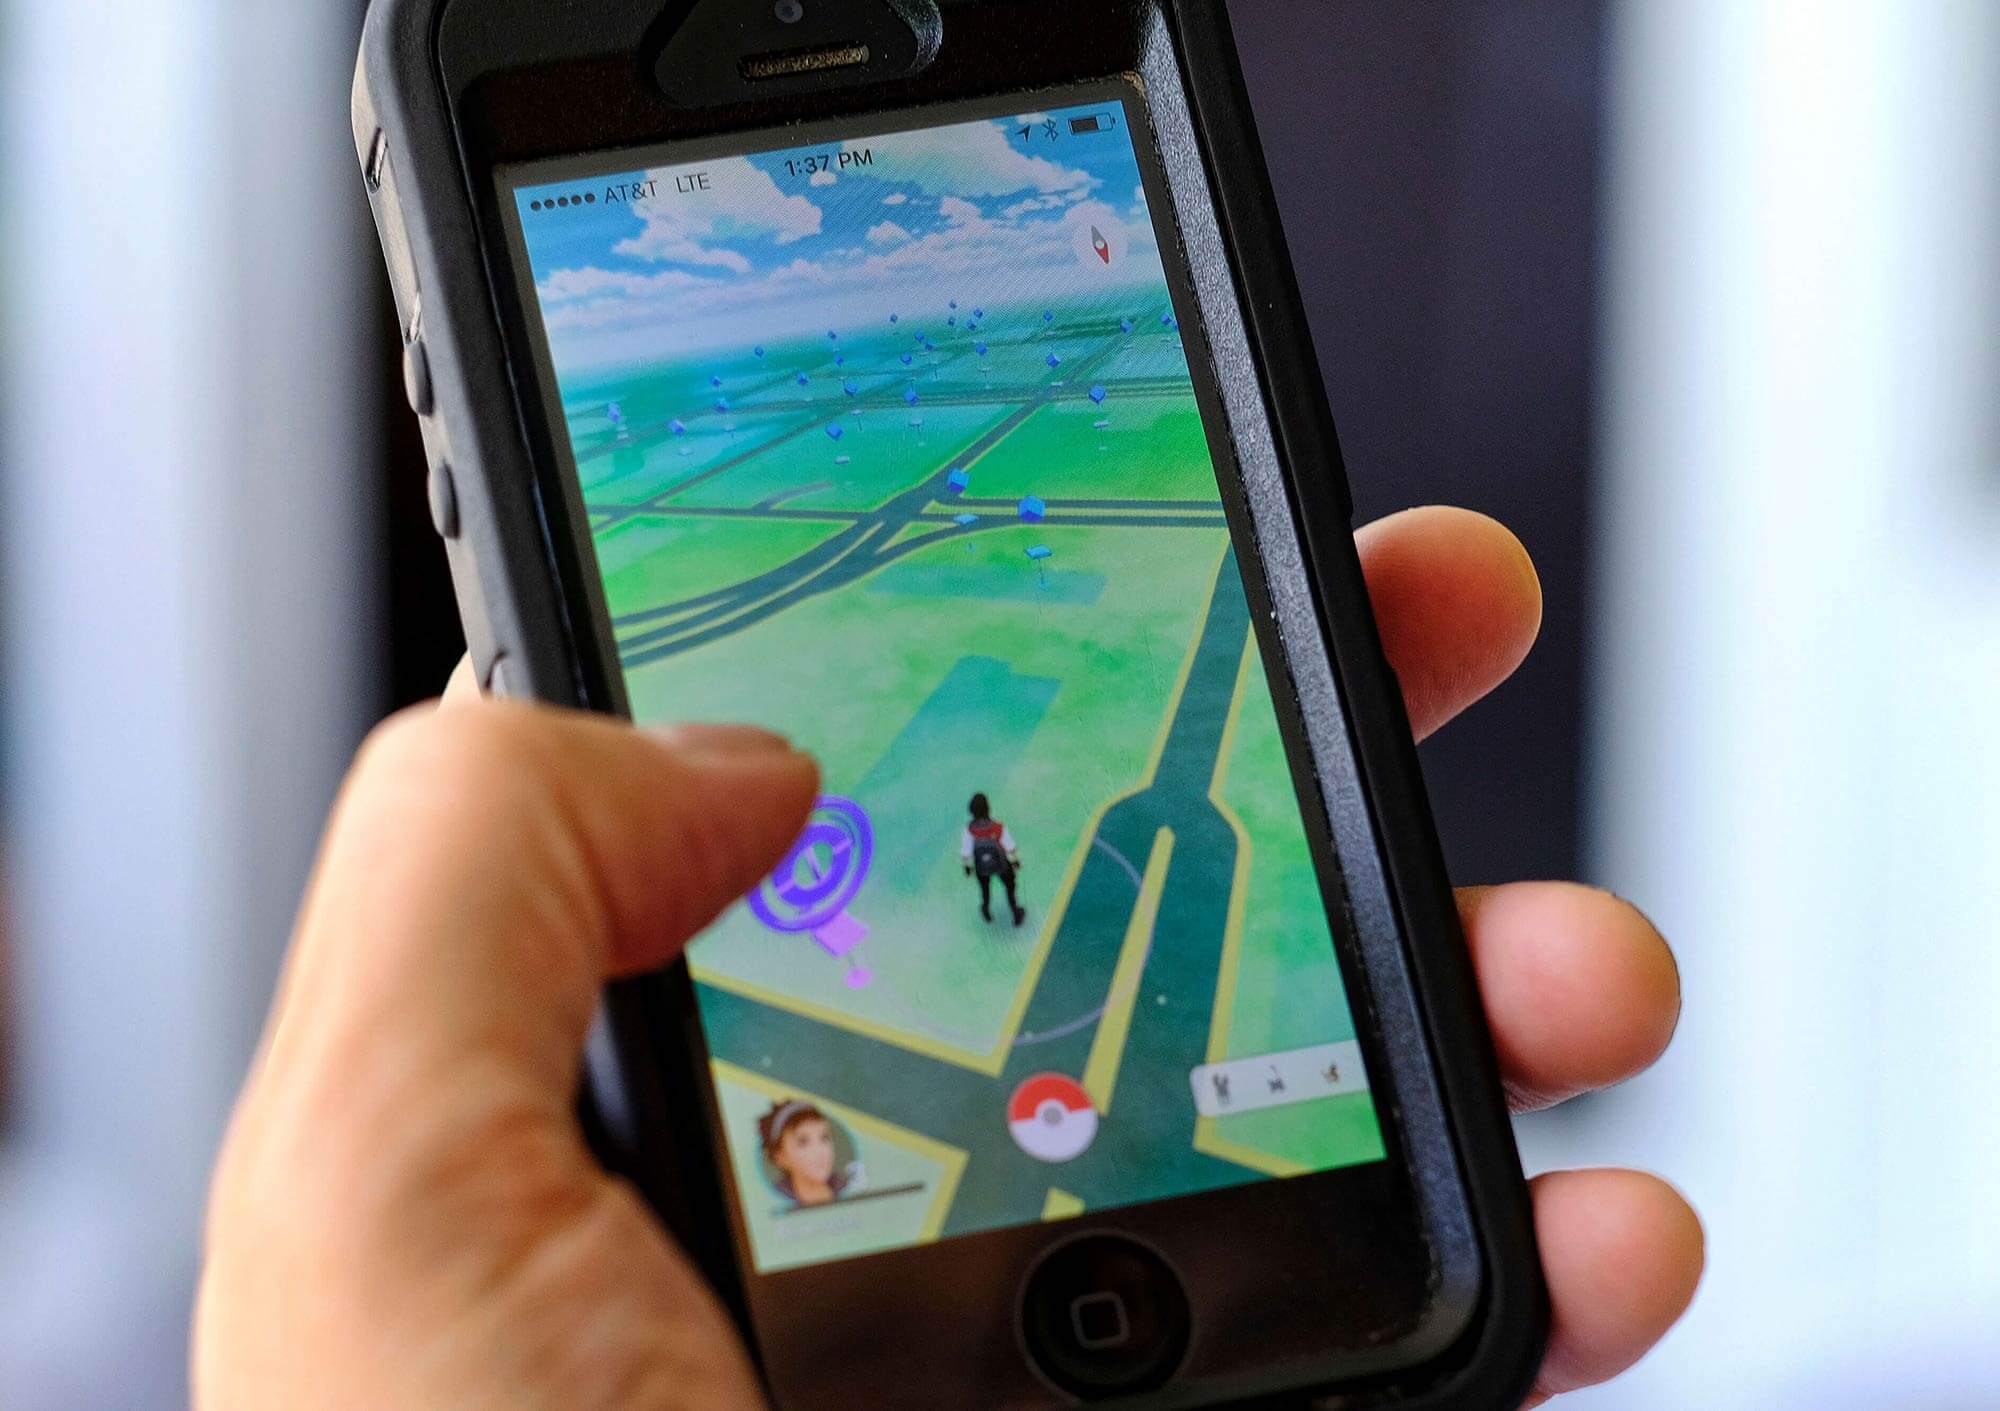 Image of Pokémon Go on iPhone screen